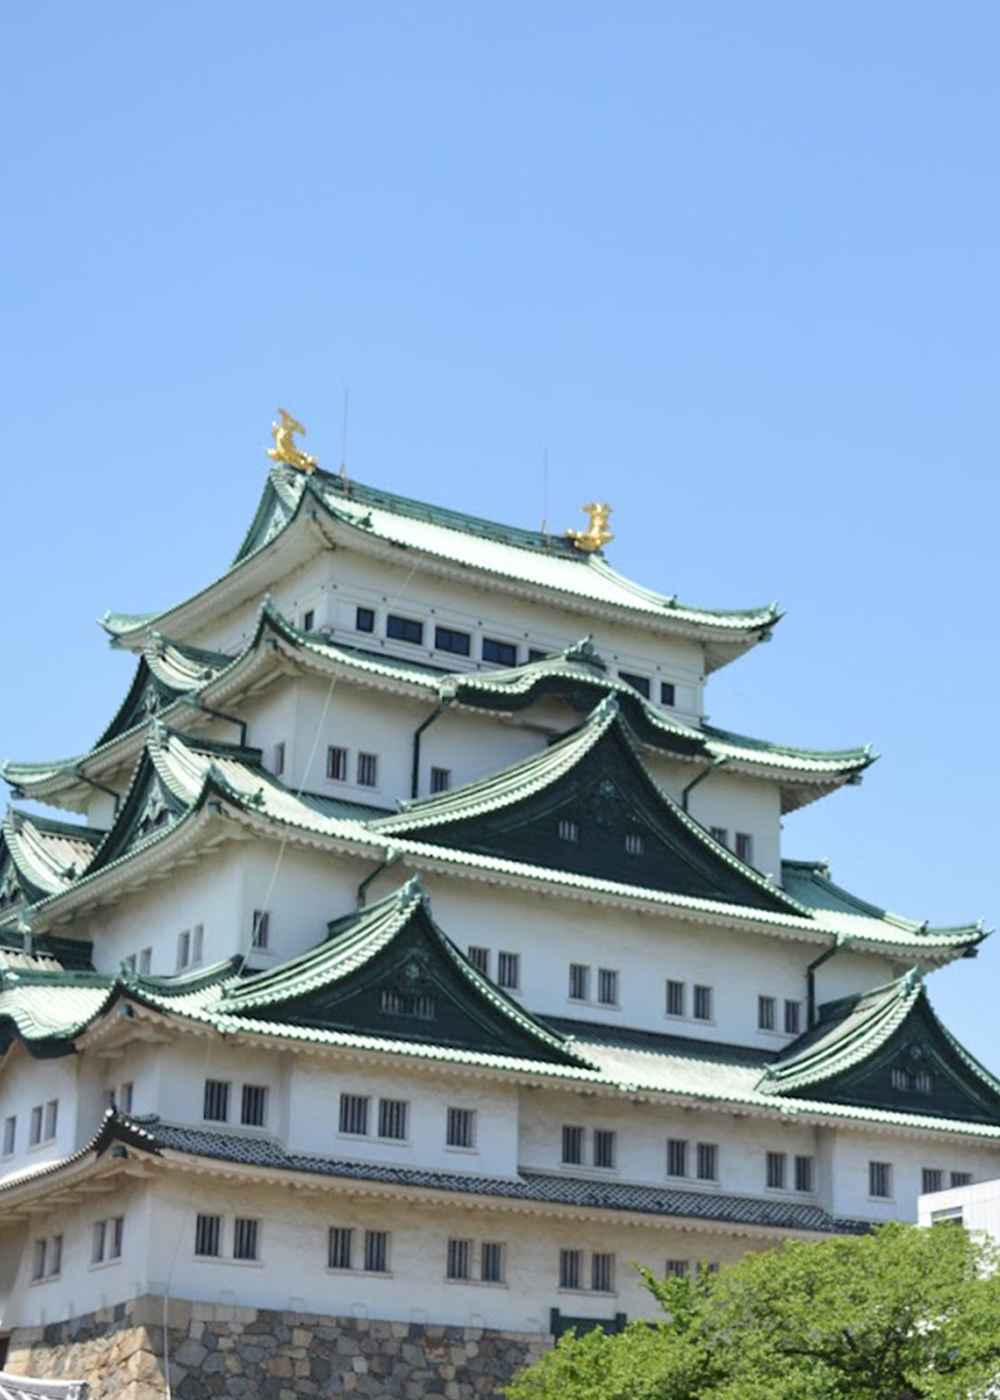 名古屋城Nagoya Castle